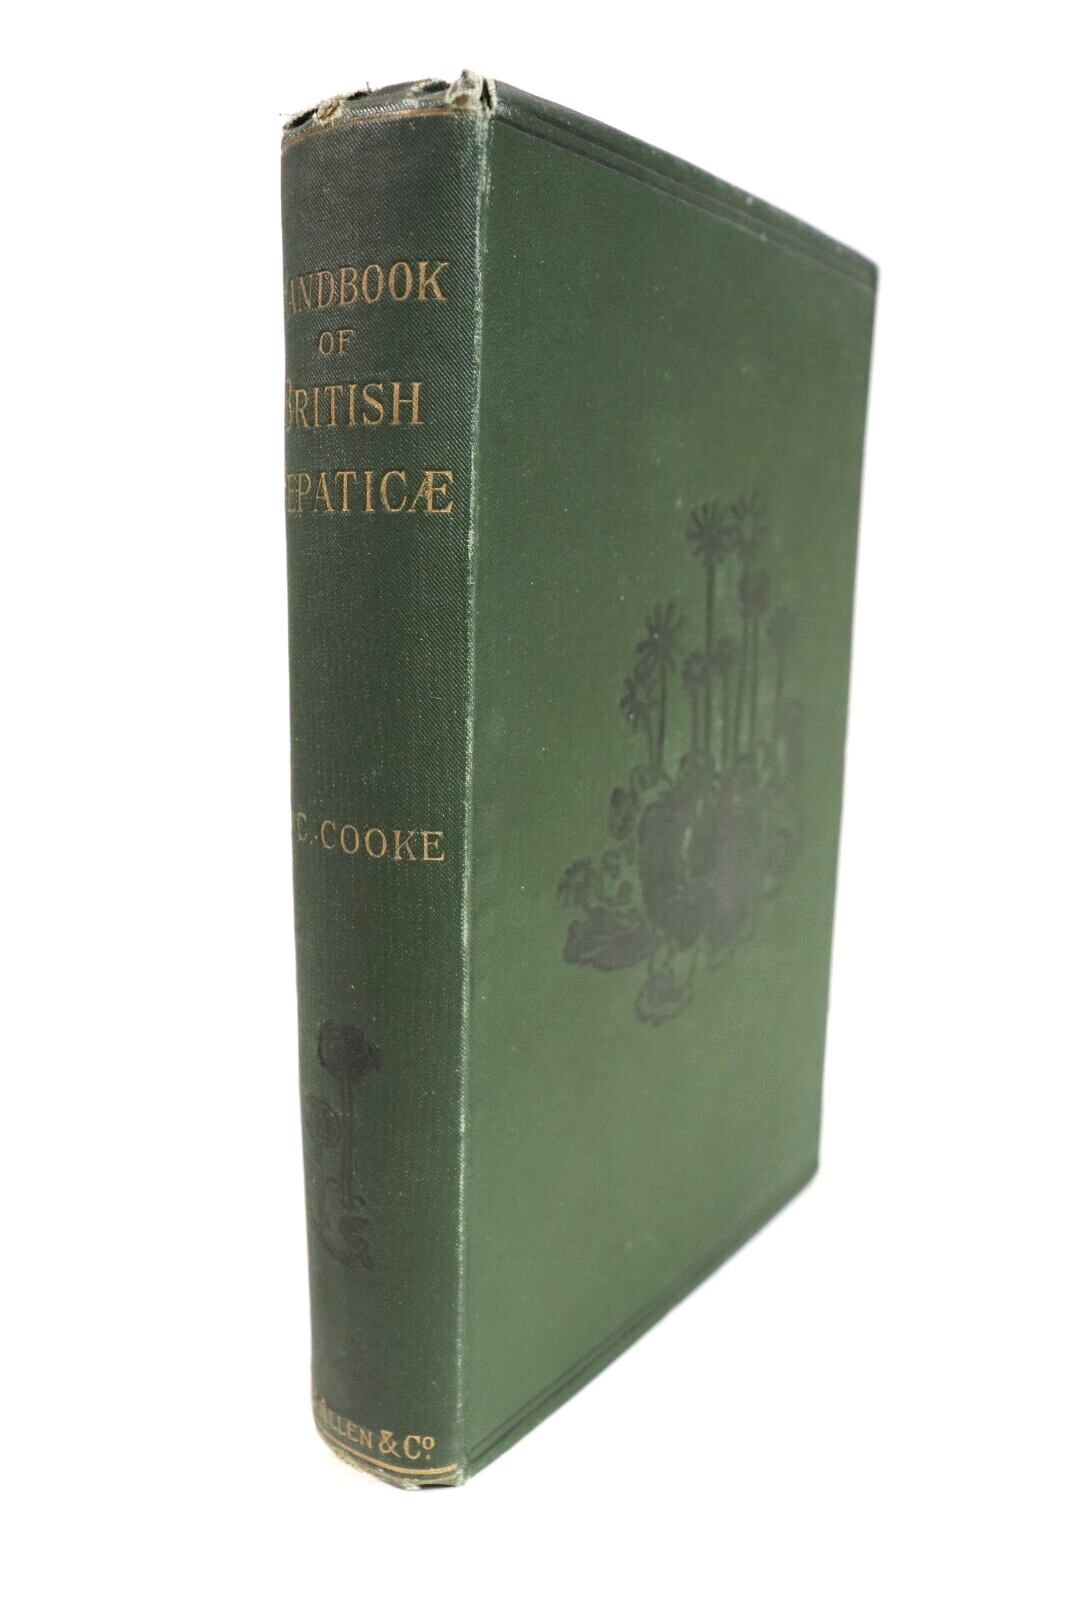 Handbook Of British Hepaticae by M. Cooke - 1894 - Antique Natural History Book